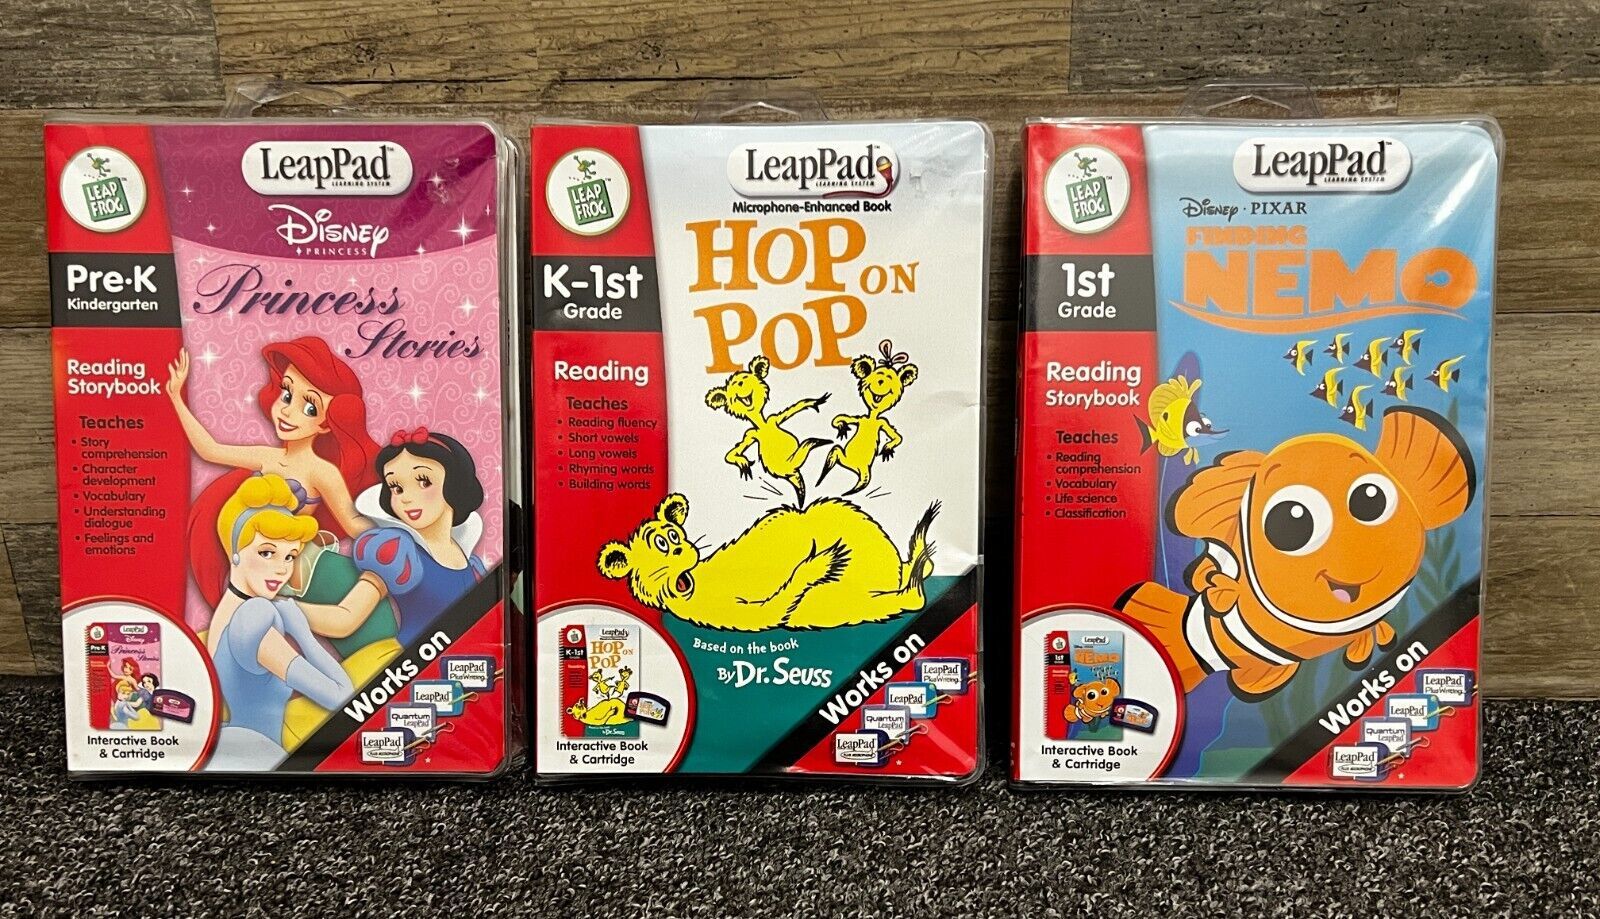 Leap Frog Leap Pad Disney Lot of 3 Book & Cartridge Sets Pre-K  K-1st 1st Grades - $13.54